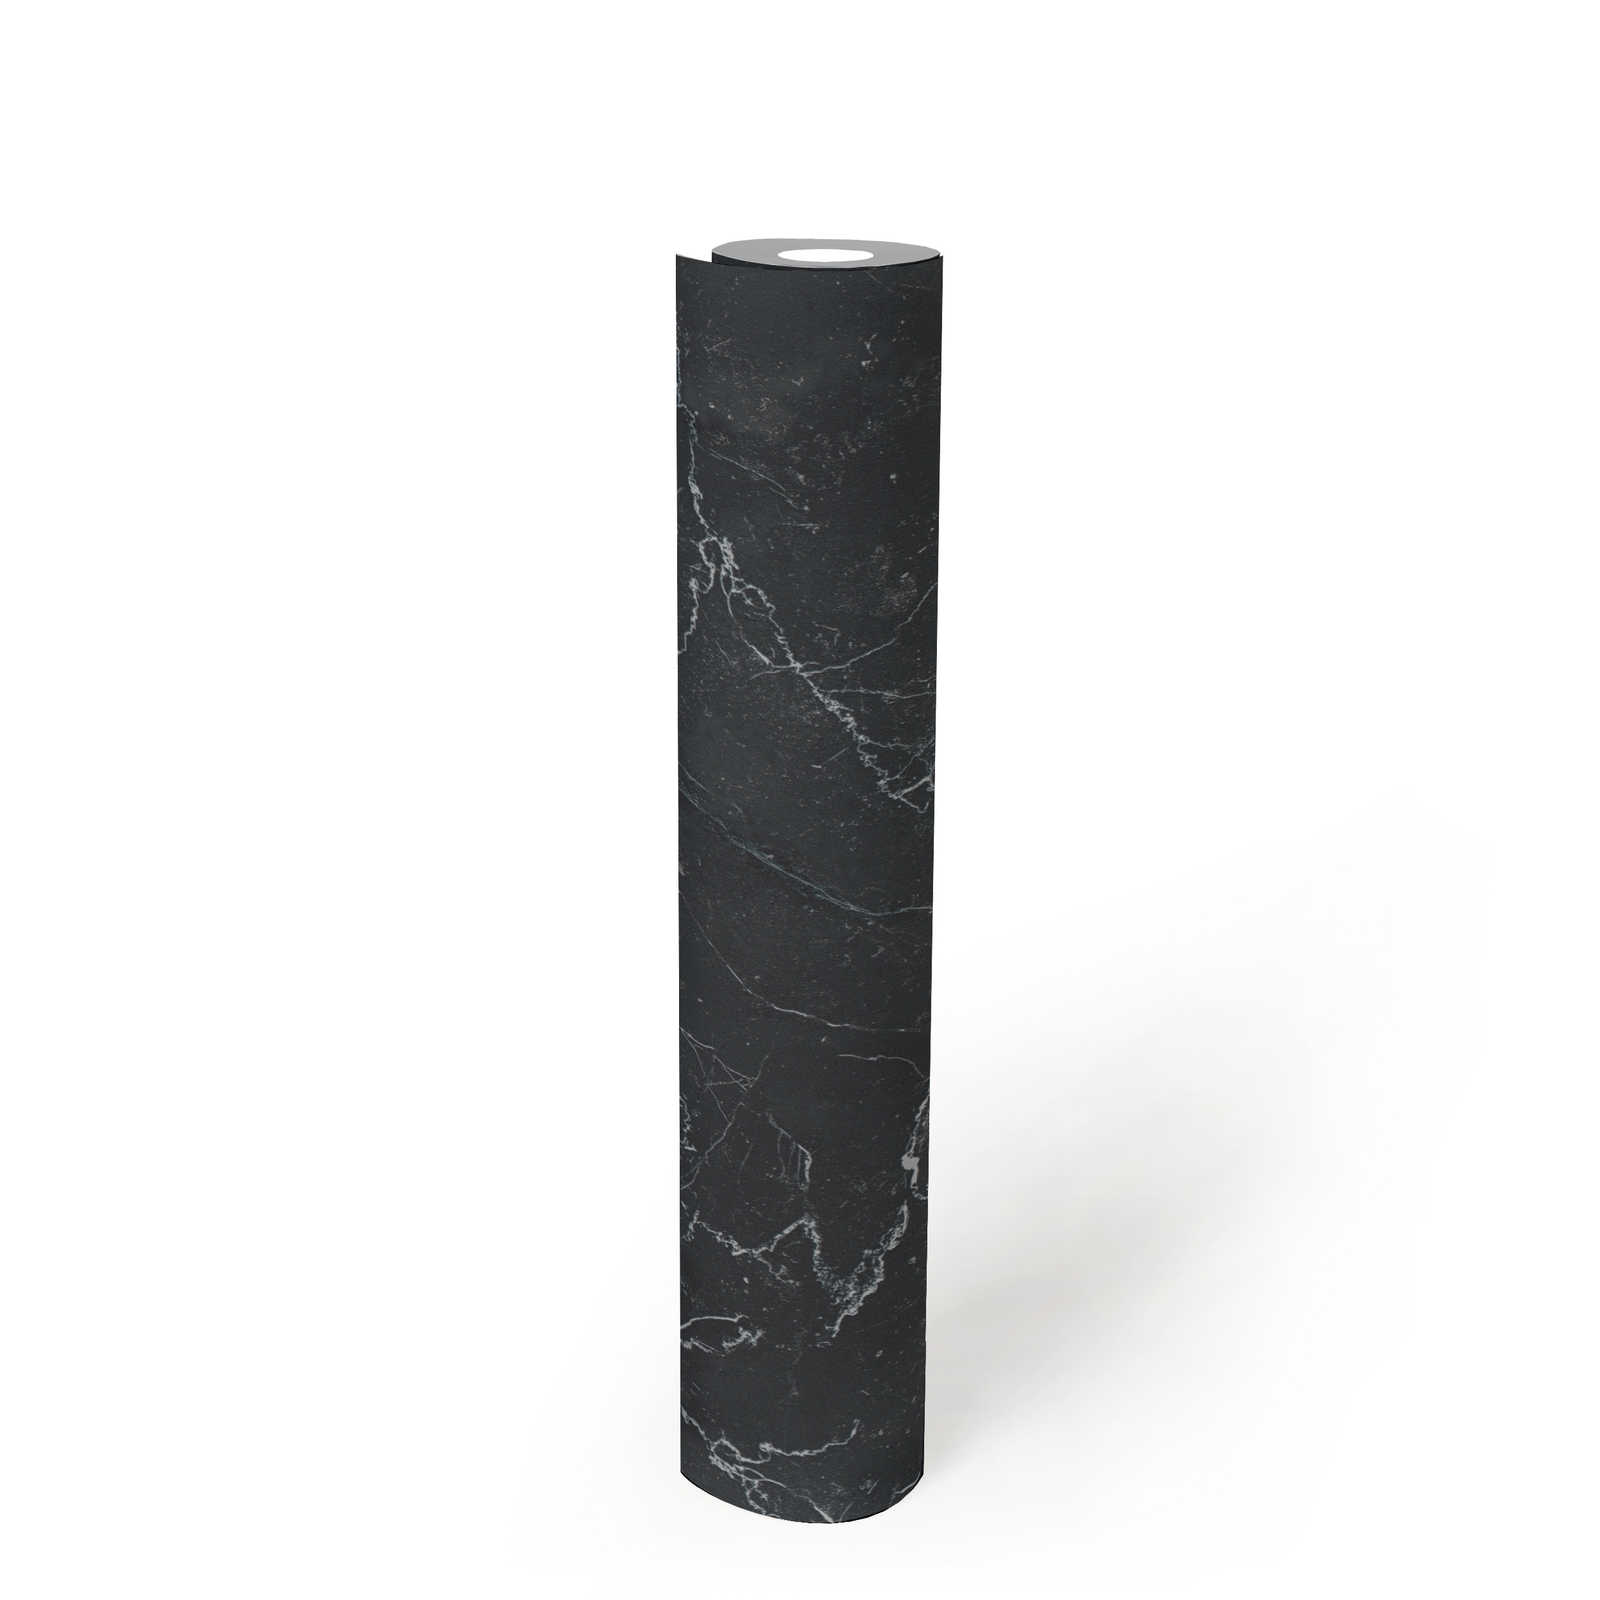             Papel pintado no tejido aspecto mármol gris oscuro, Diseño de MICHALSKY
        